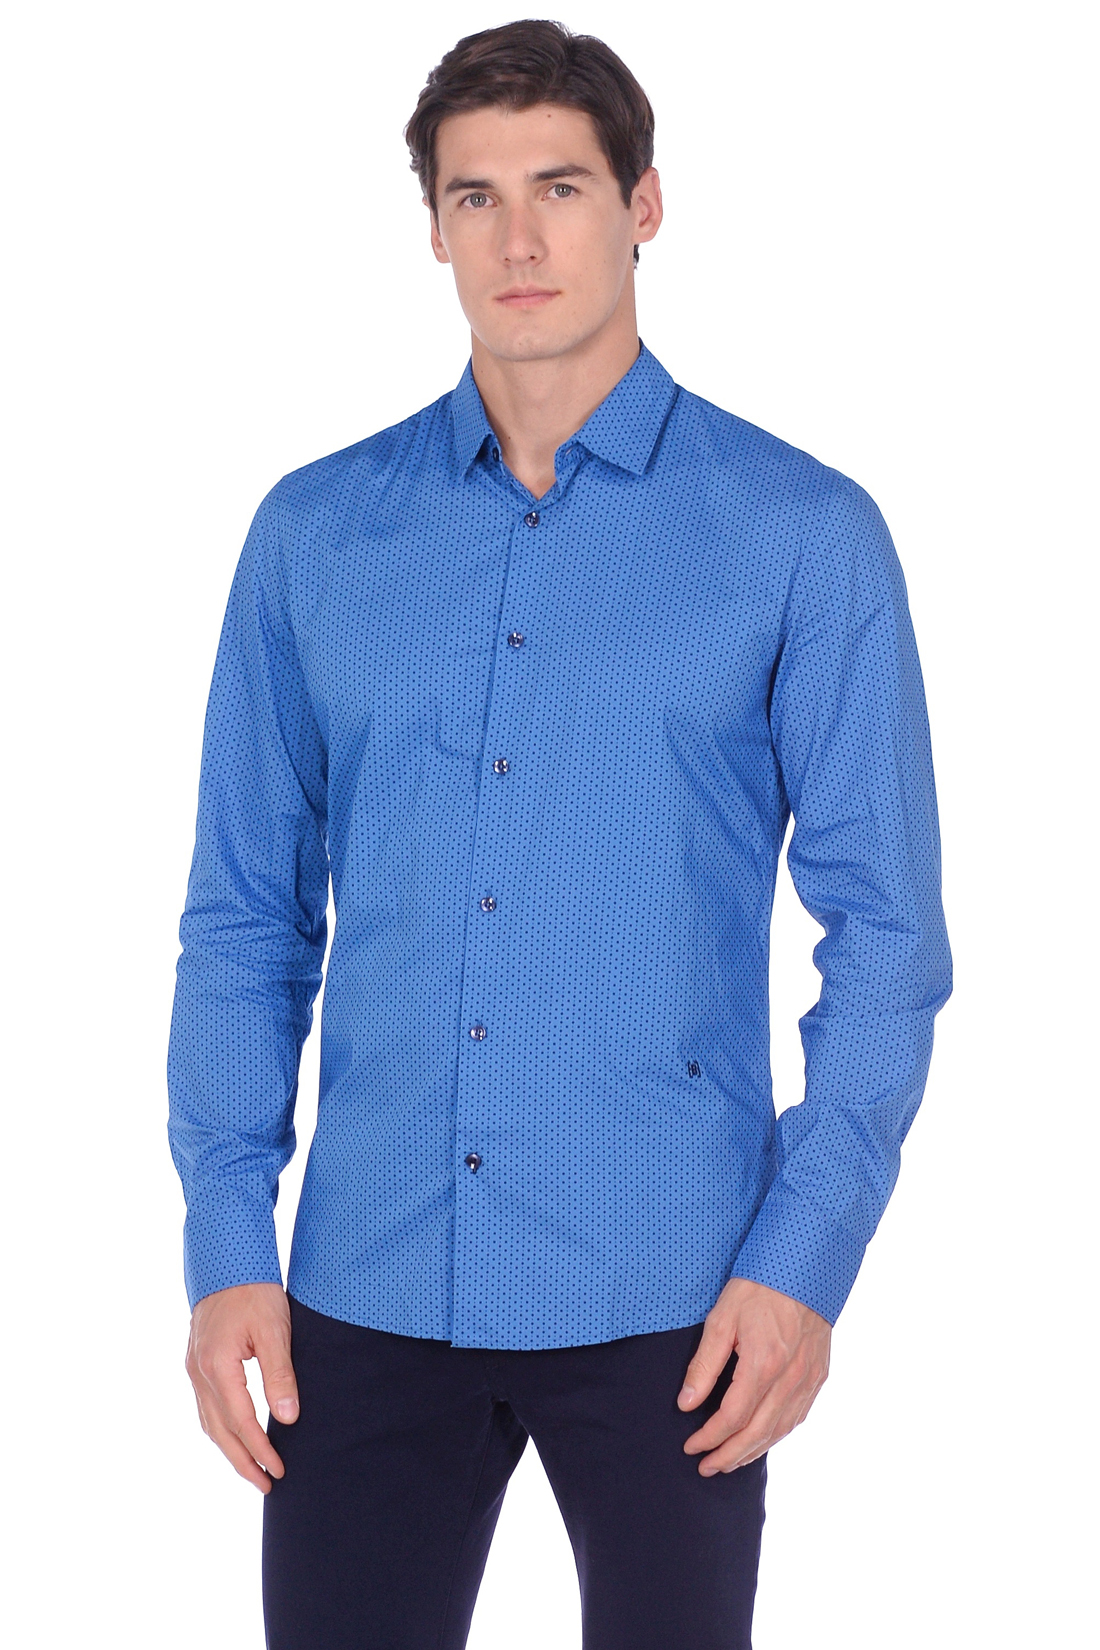 Рубашка с орнаментом (арт. baon B669508), размер 3XL, цвет dark baltic blue printed#синий